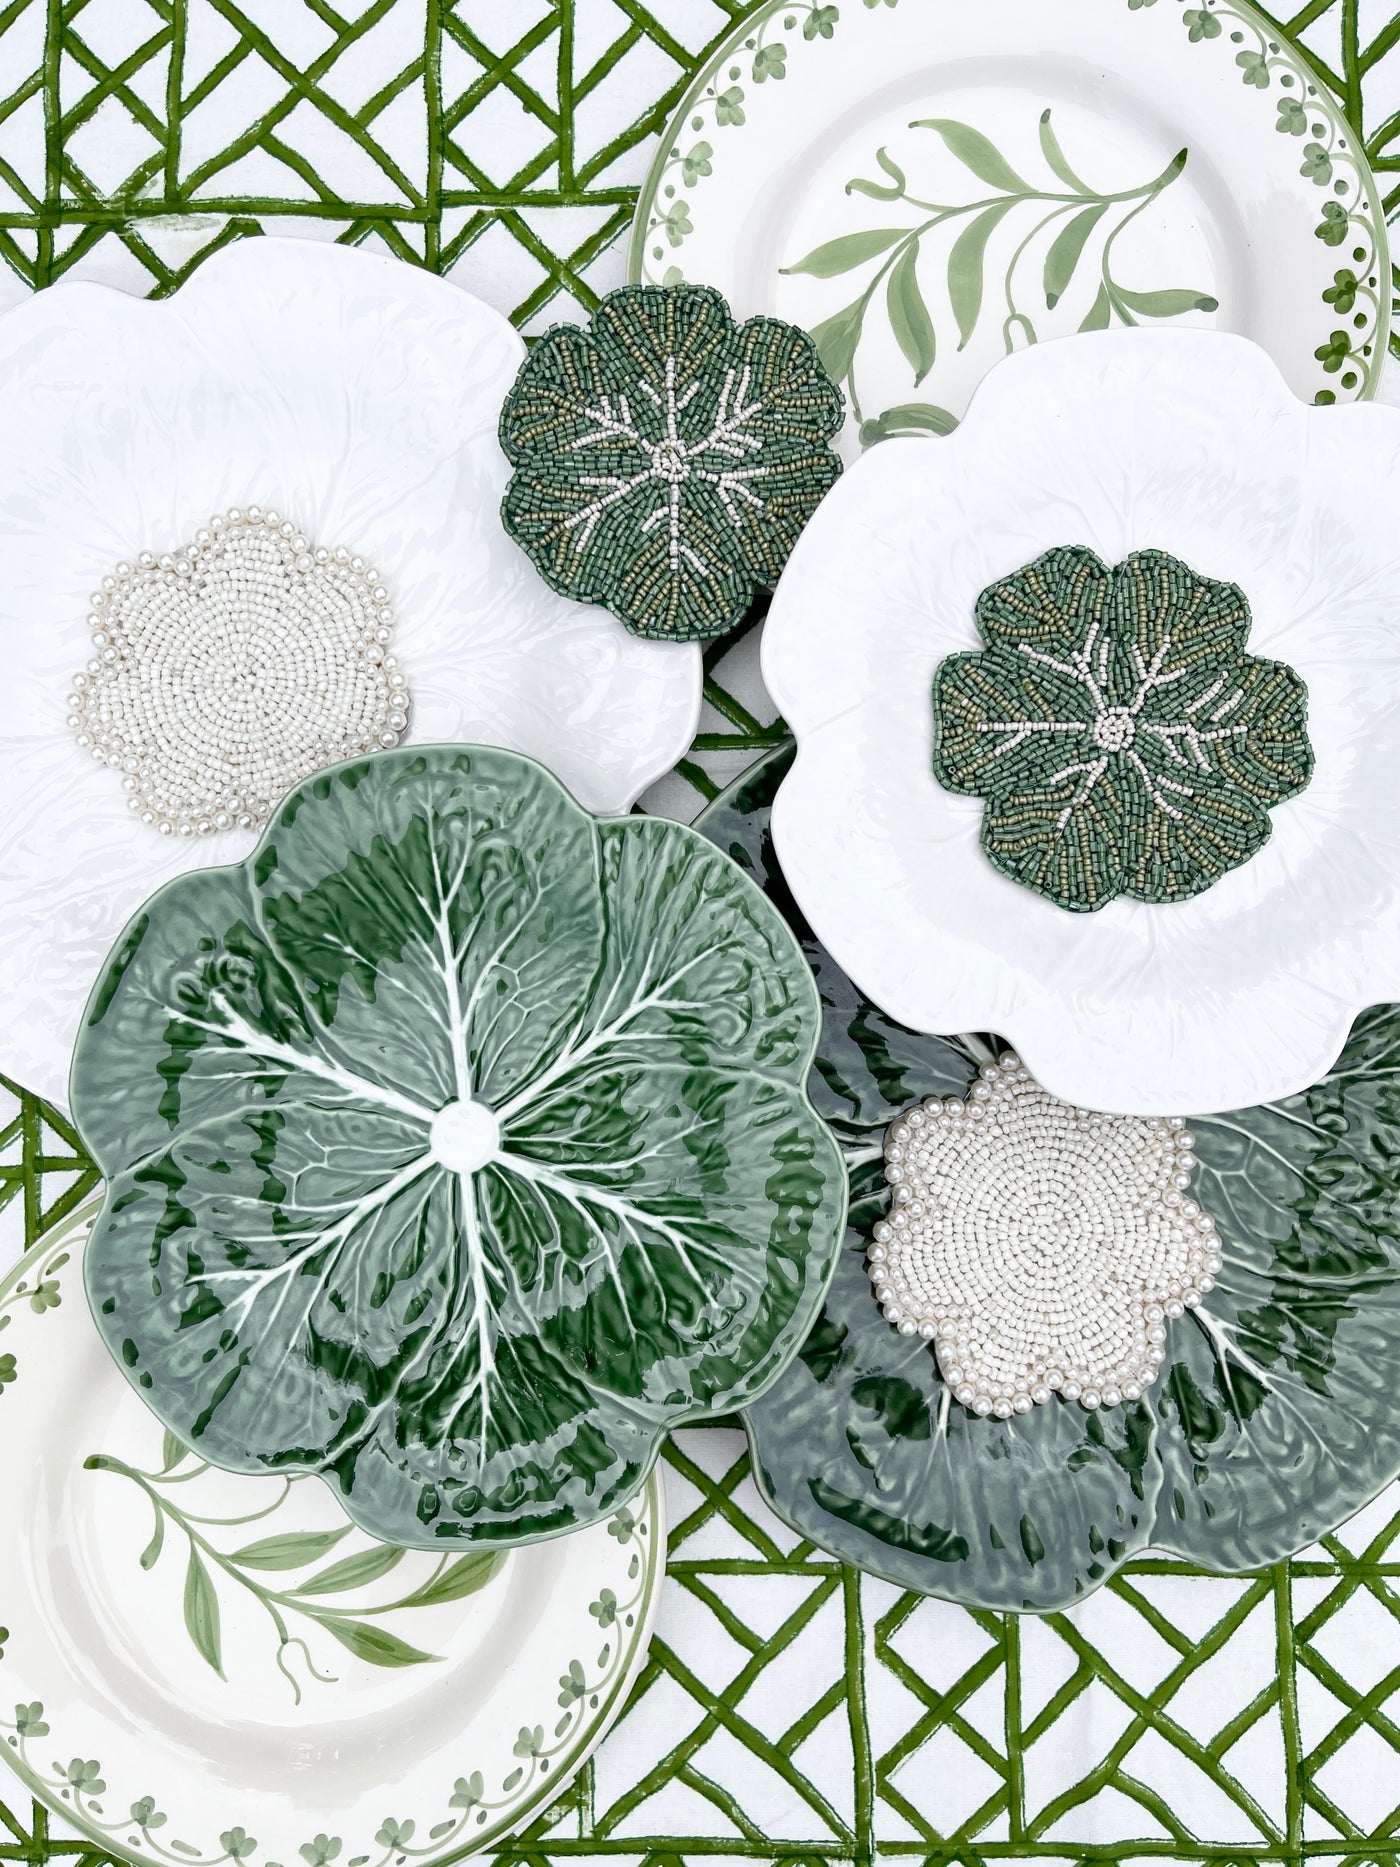 'Leaf' Salad Plate - Green